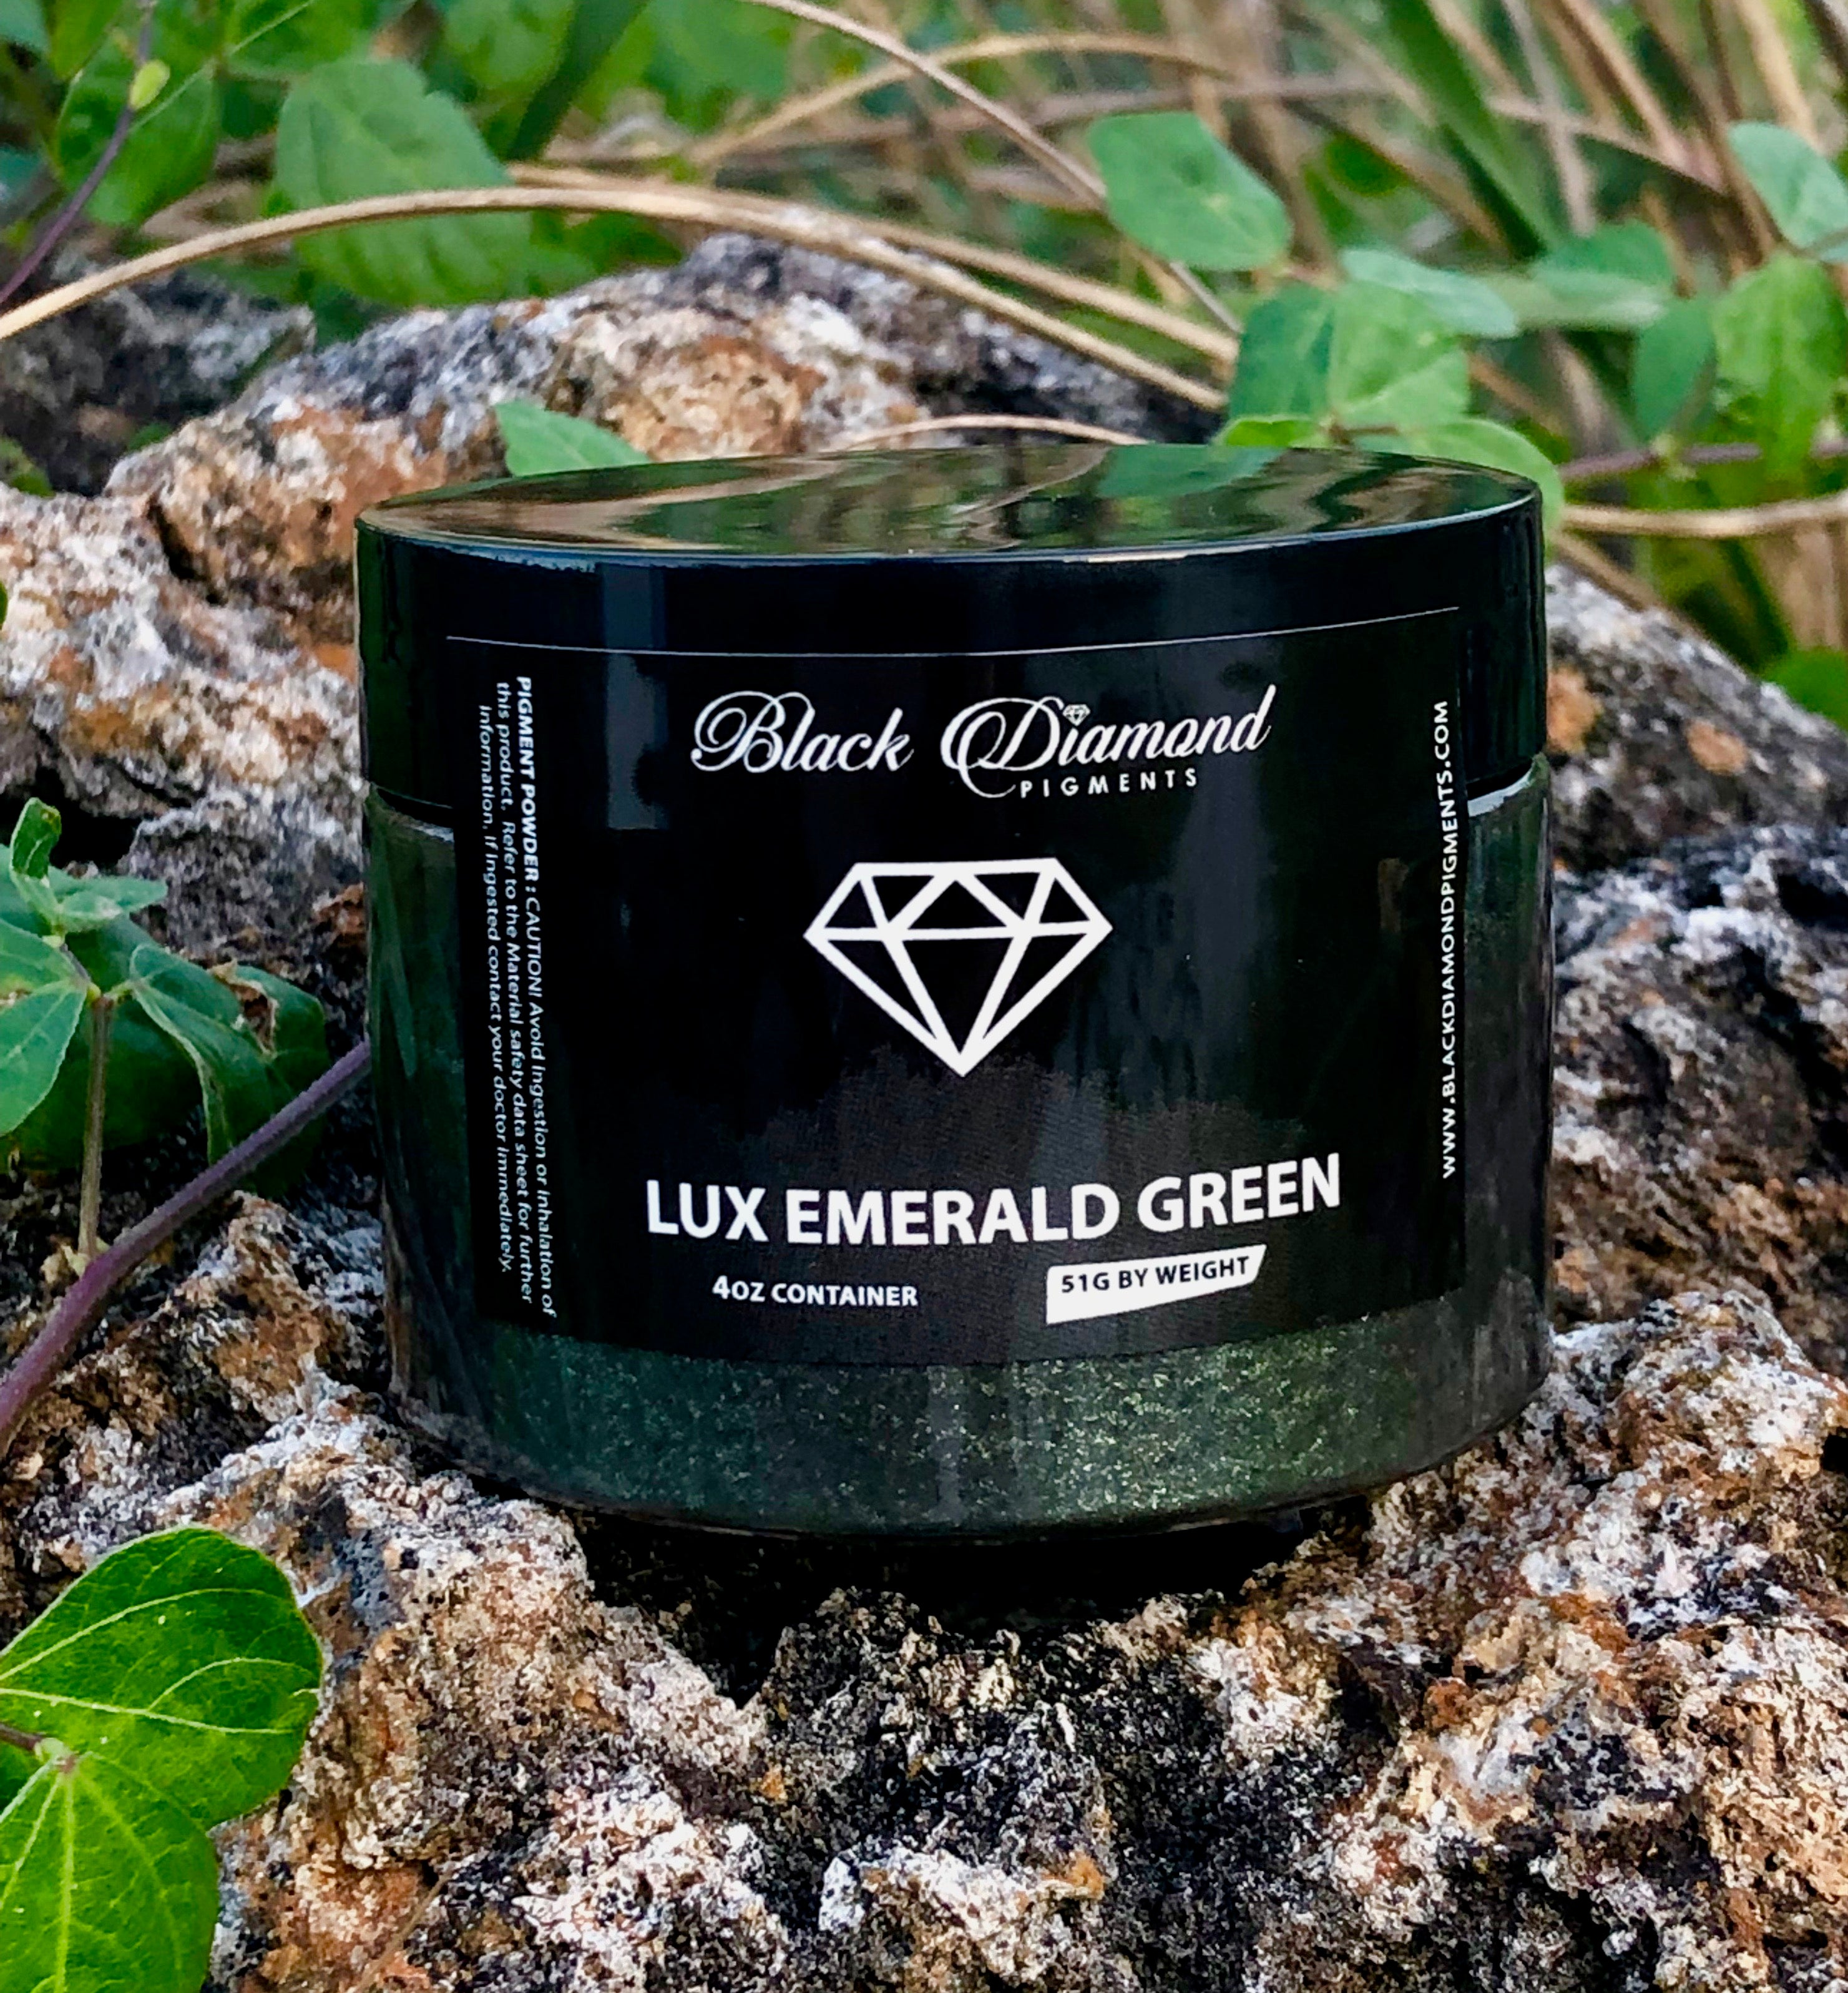 "LUX EMERALD GREEN" Black Diamond Pigments